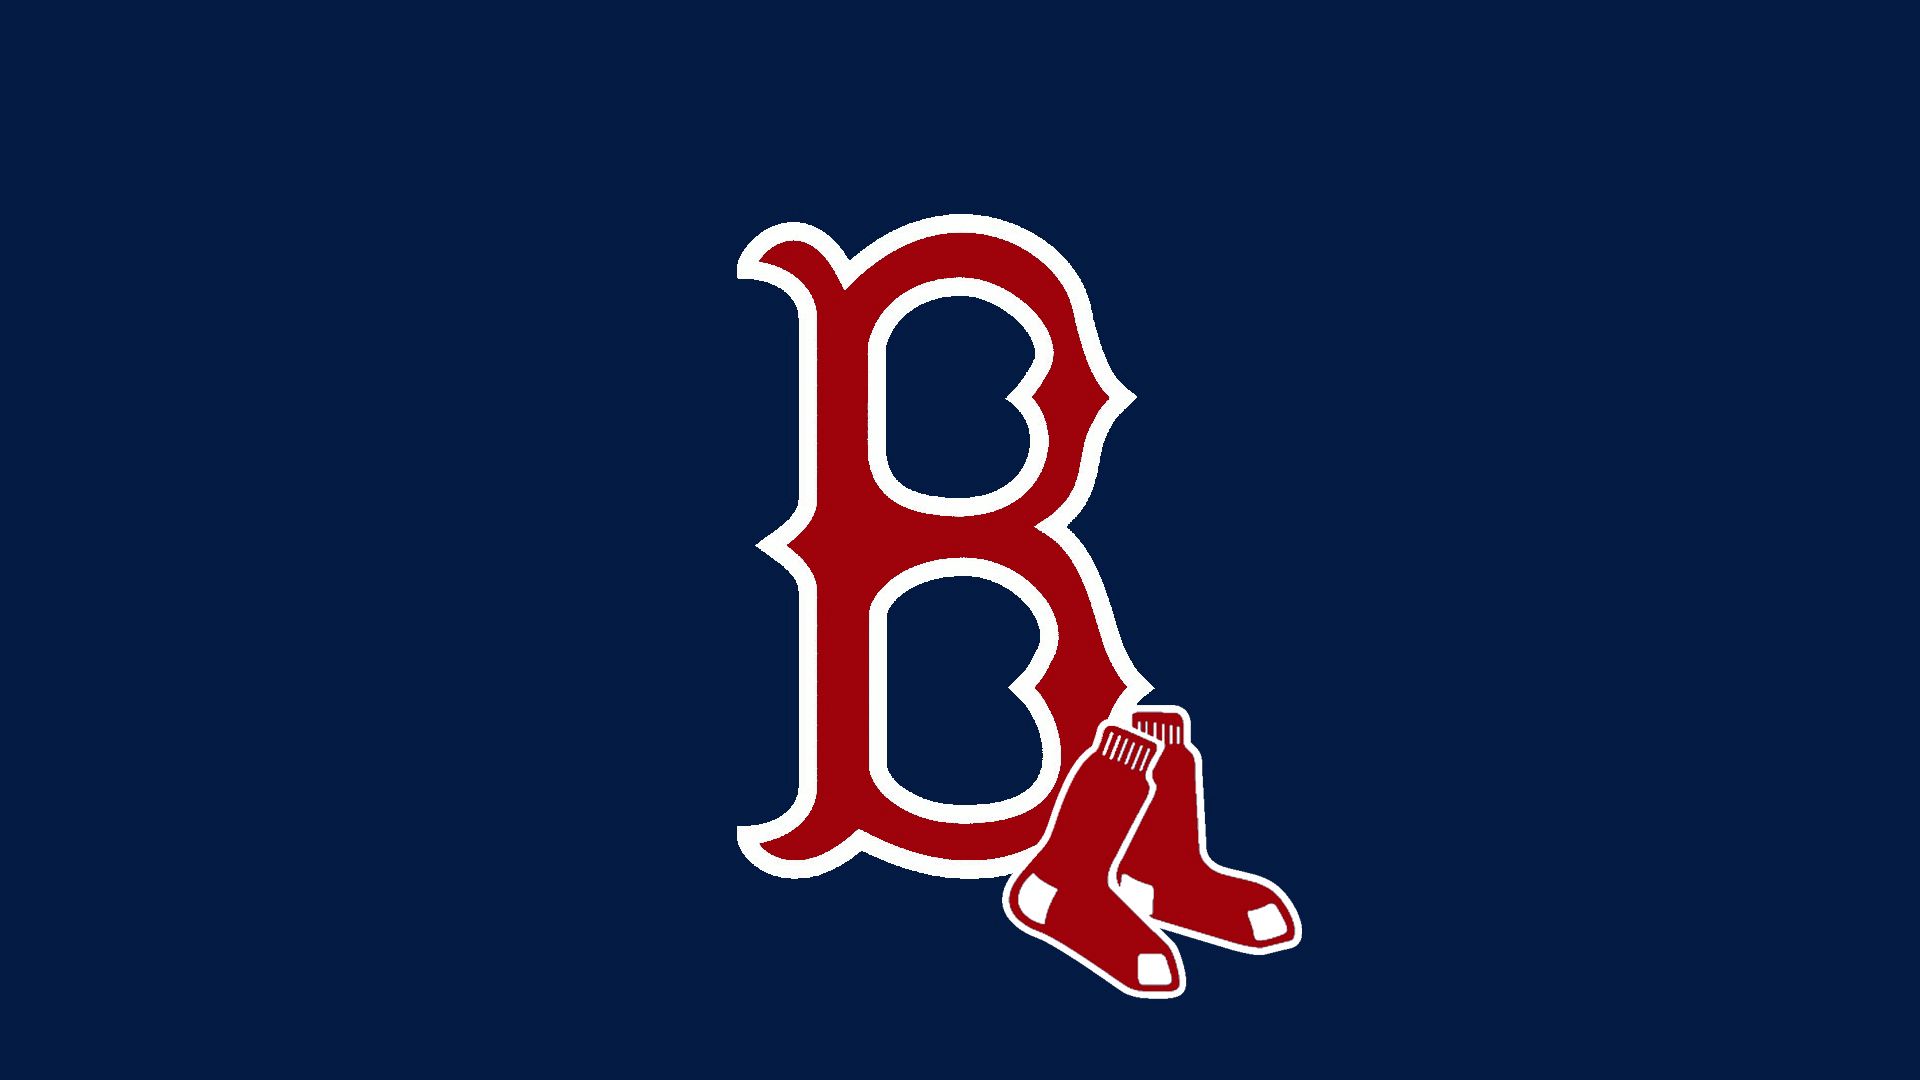 Boston Red Sox, Спорт, 2015, Red Sox, Phillies обои на телефон скачать бесп...